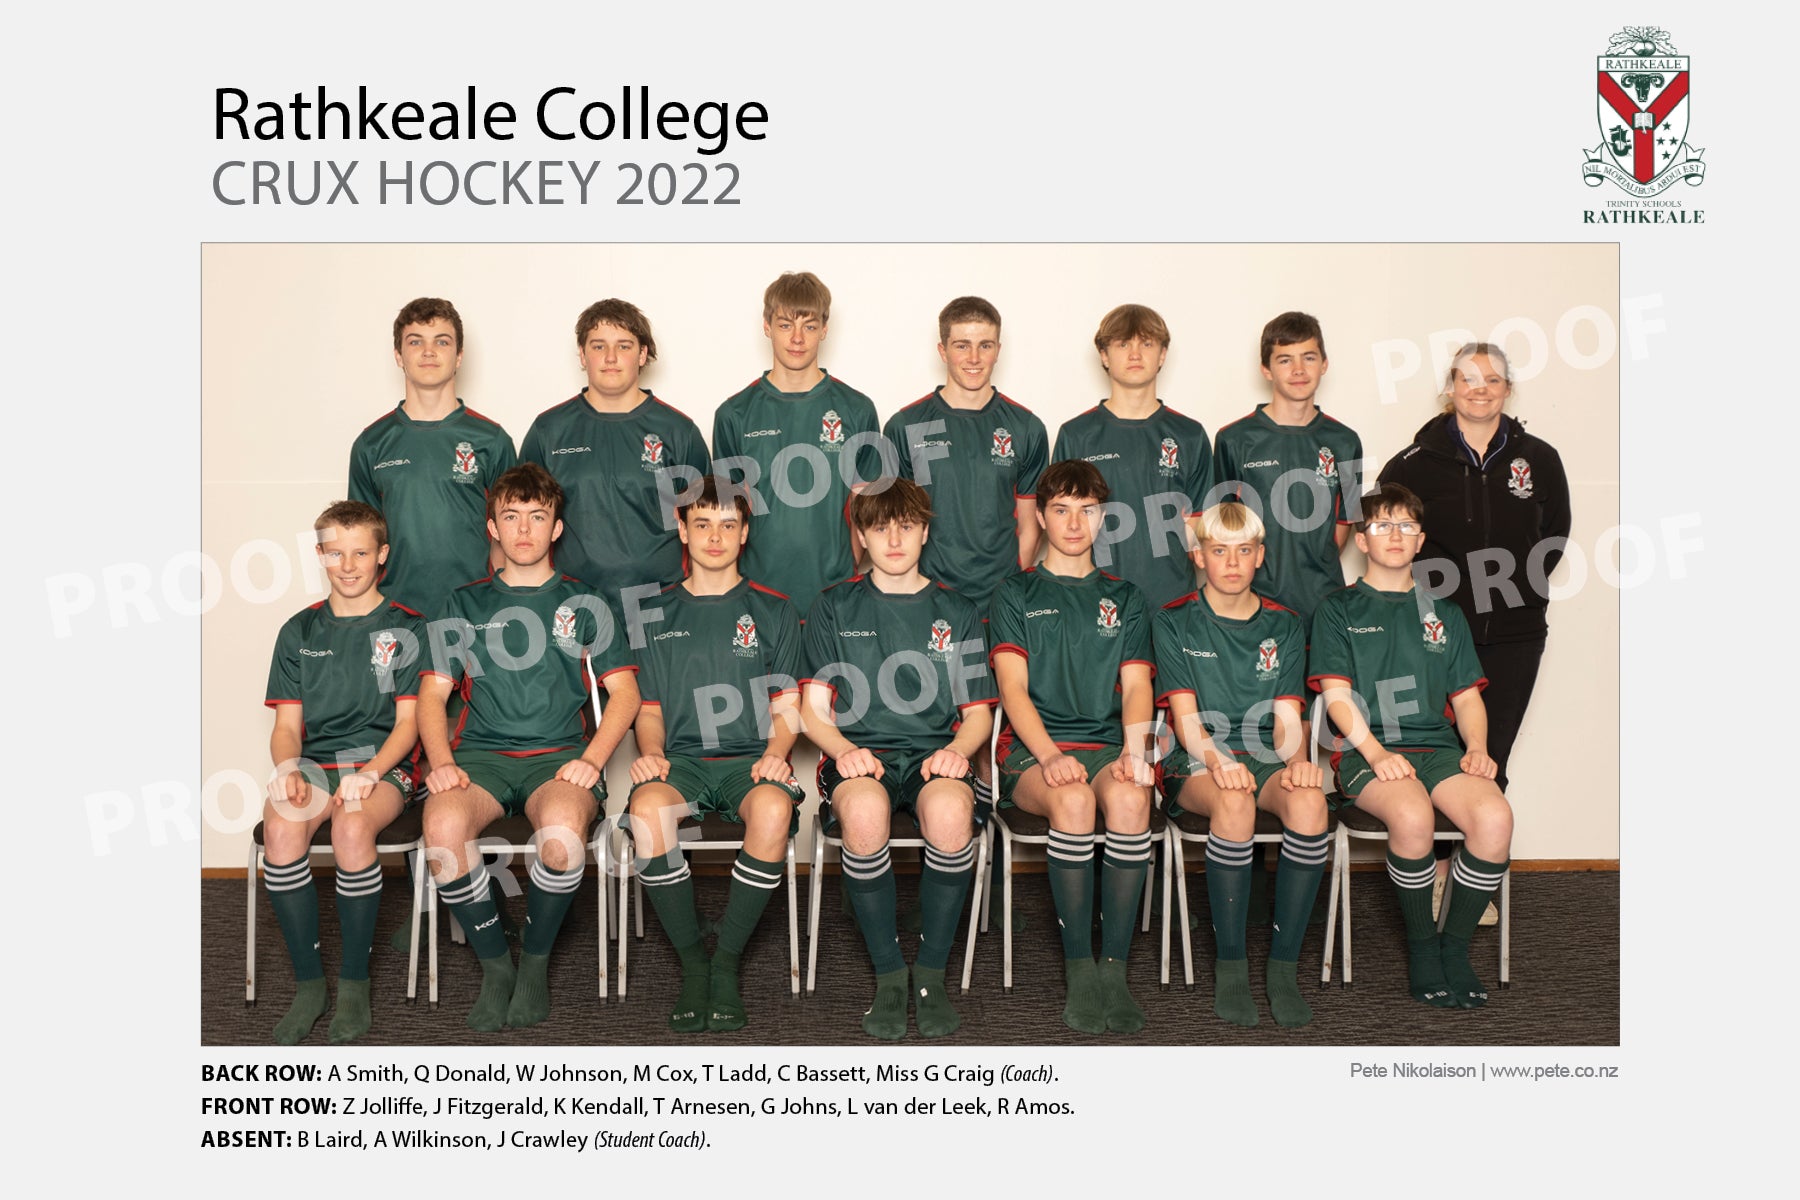 Hockey Crux - Rathkeale College 2022